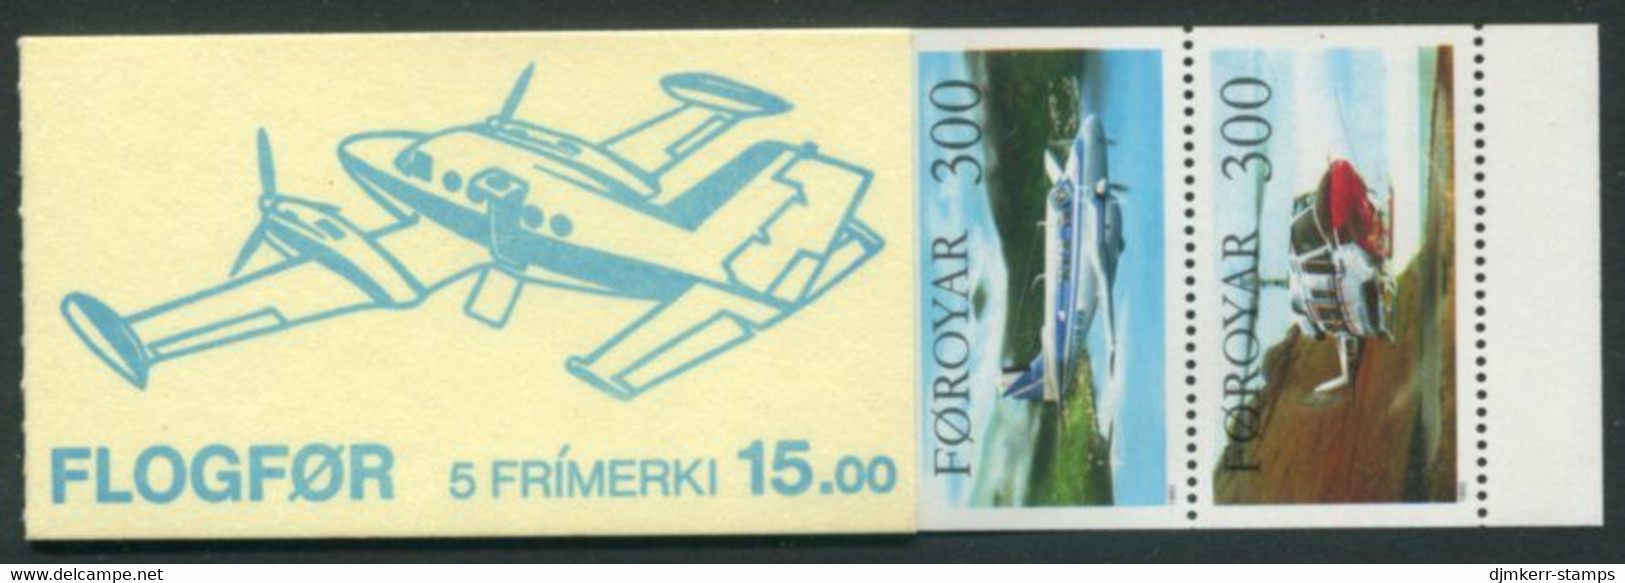 FAROE IS. 1985 Aircraft Booklet MNH / **.  Michel 125-29, MH3 - Faroe Islands